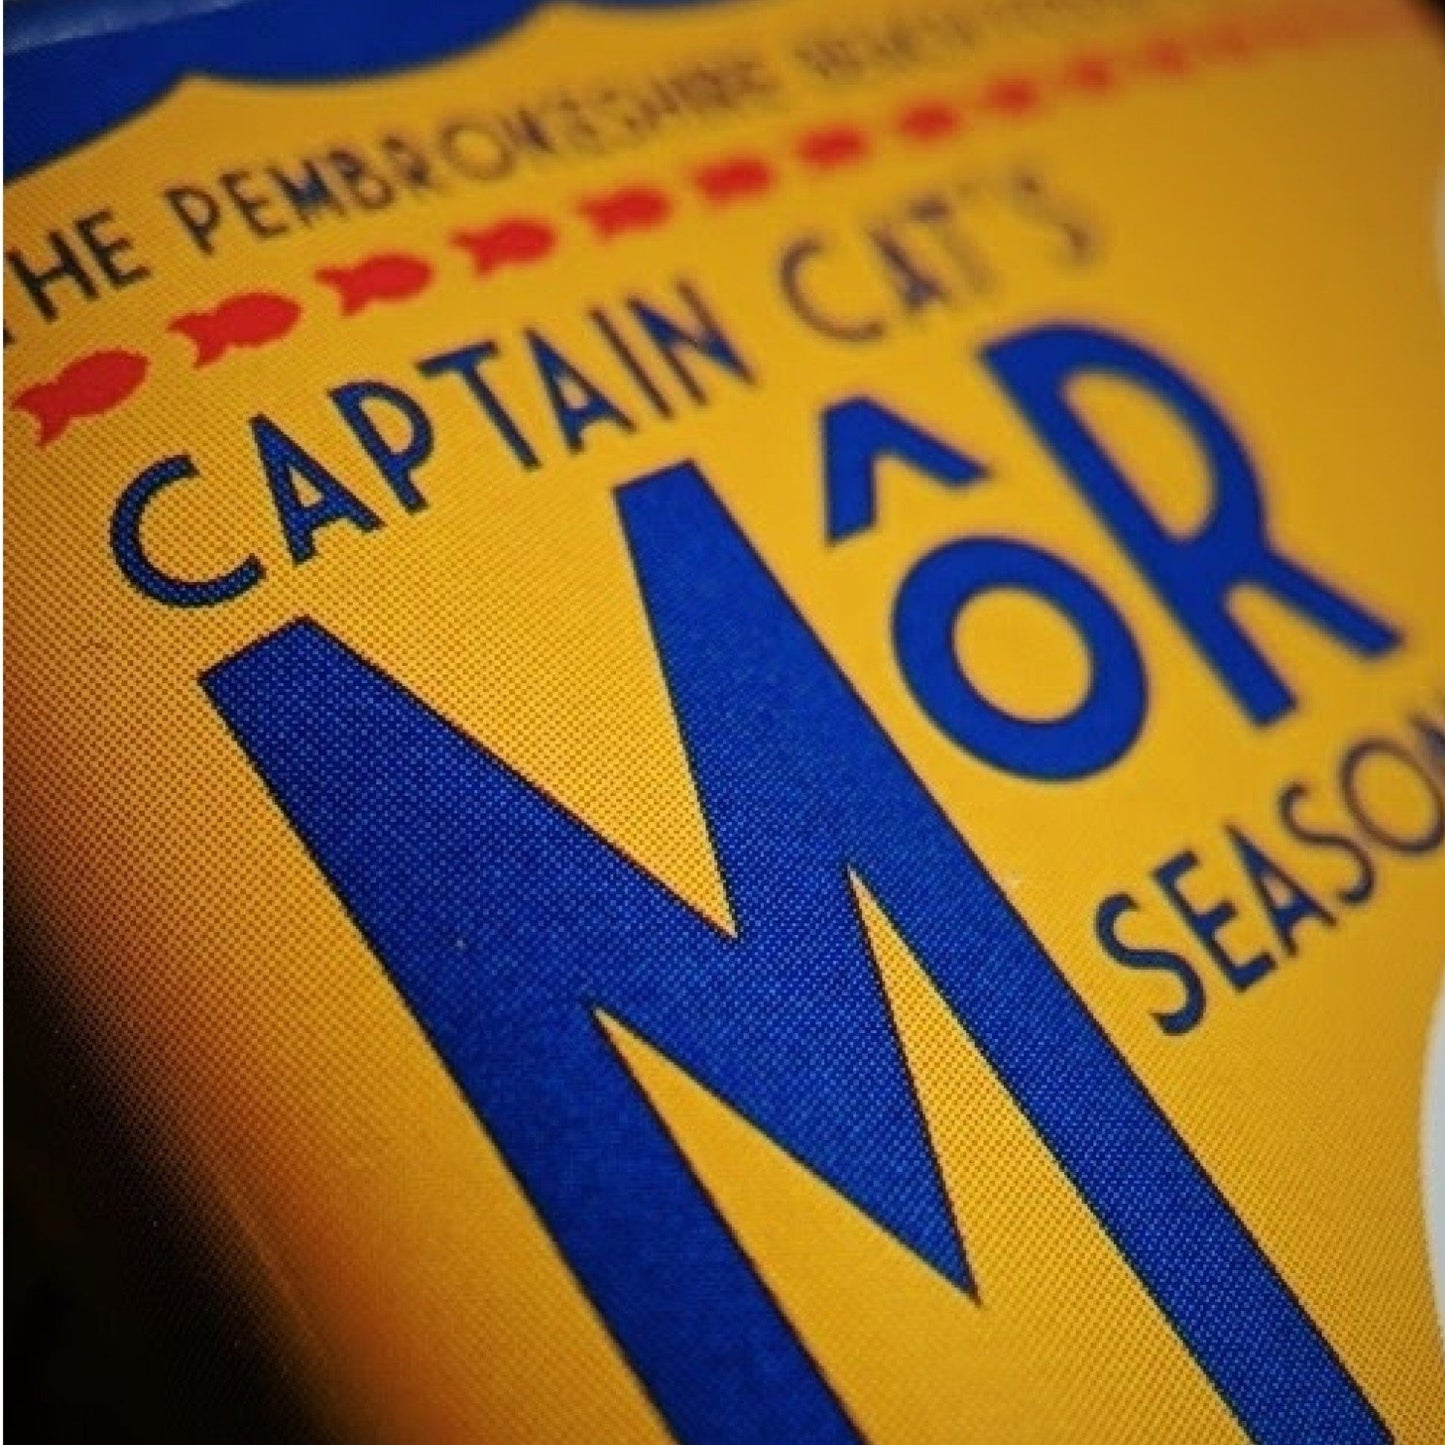 Captain Cat's Mor Seasoning